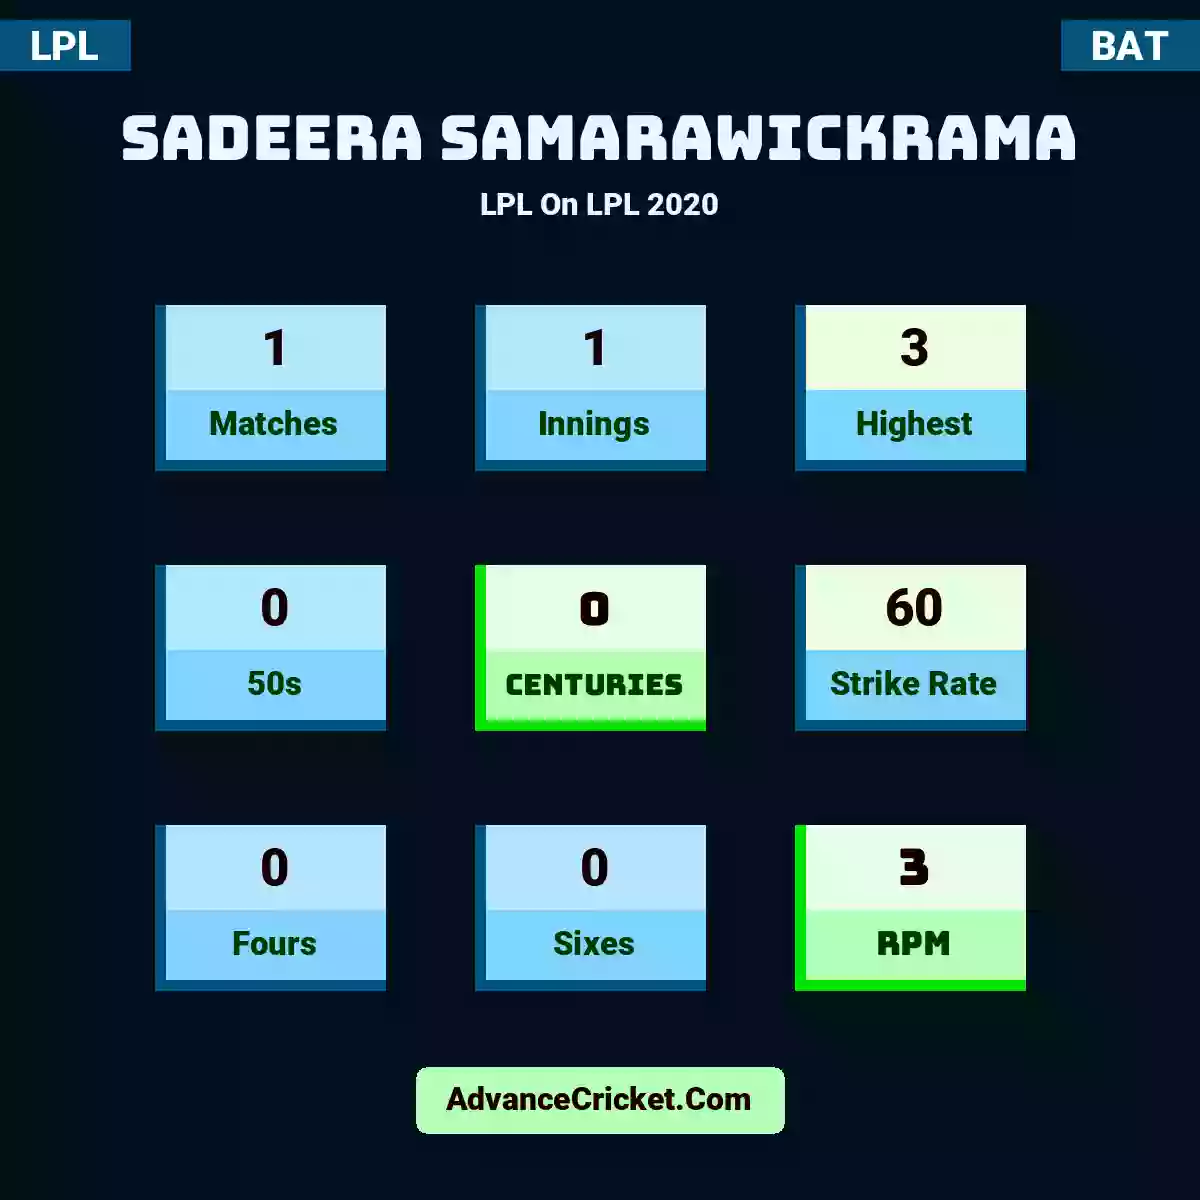 Sadeera Samarawickrama LPL  On LPL 2020, Sadeera Samarawickrama played 1 matches, scored 3 runs as highest, 0 half-centuries, and 0 centuries, with a strike rate of 60. S.Samarawickrama hit 0 fours and 0 sixes, with an RPM of 3.